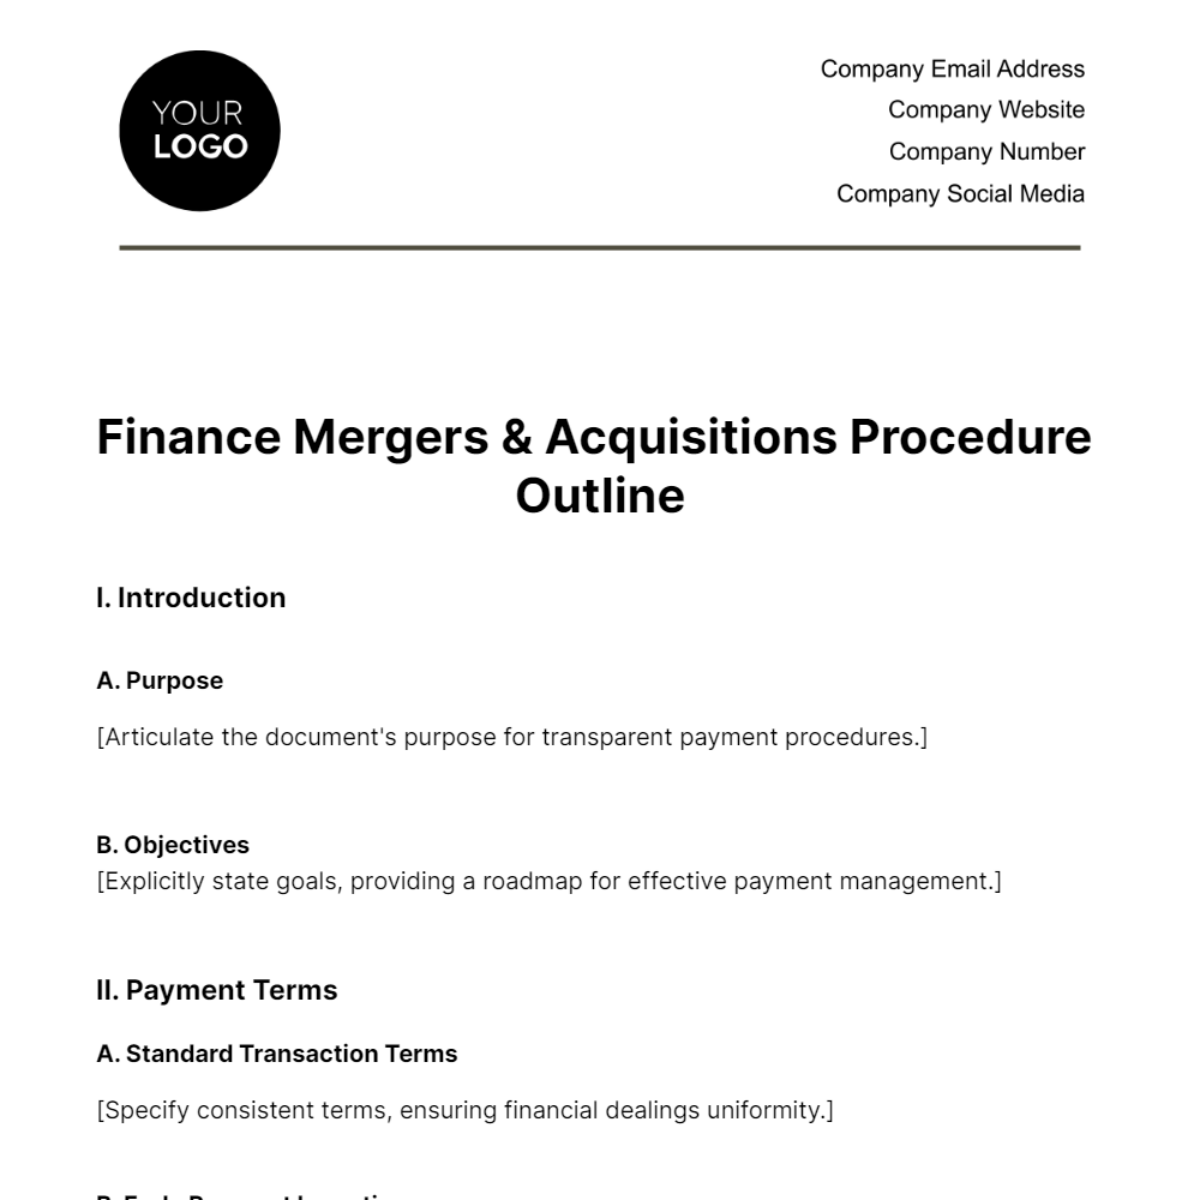 Finance Mergers & Acquisitions Procedure Outline Template